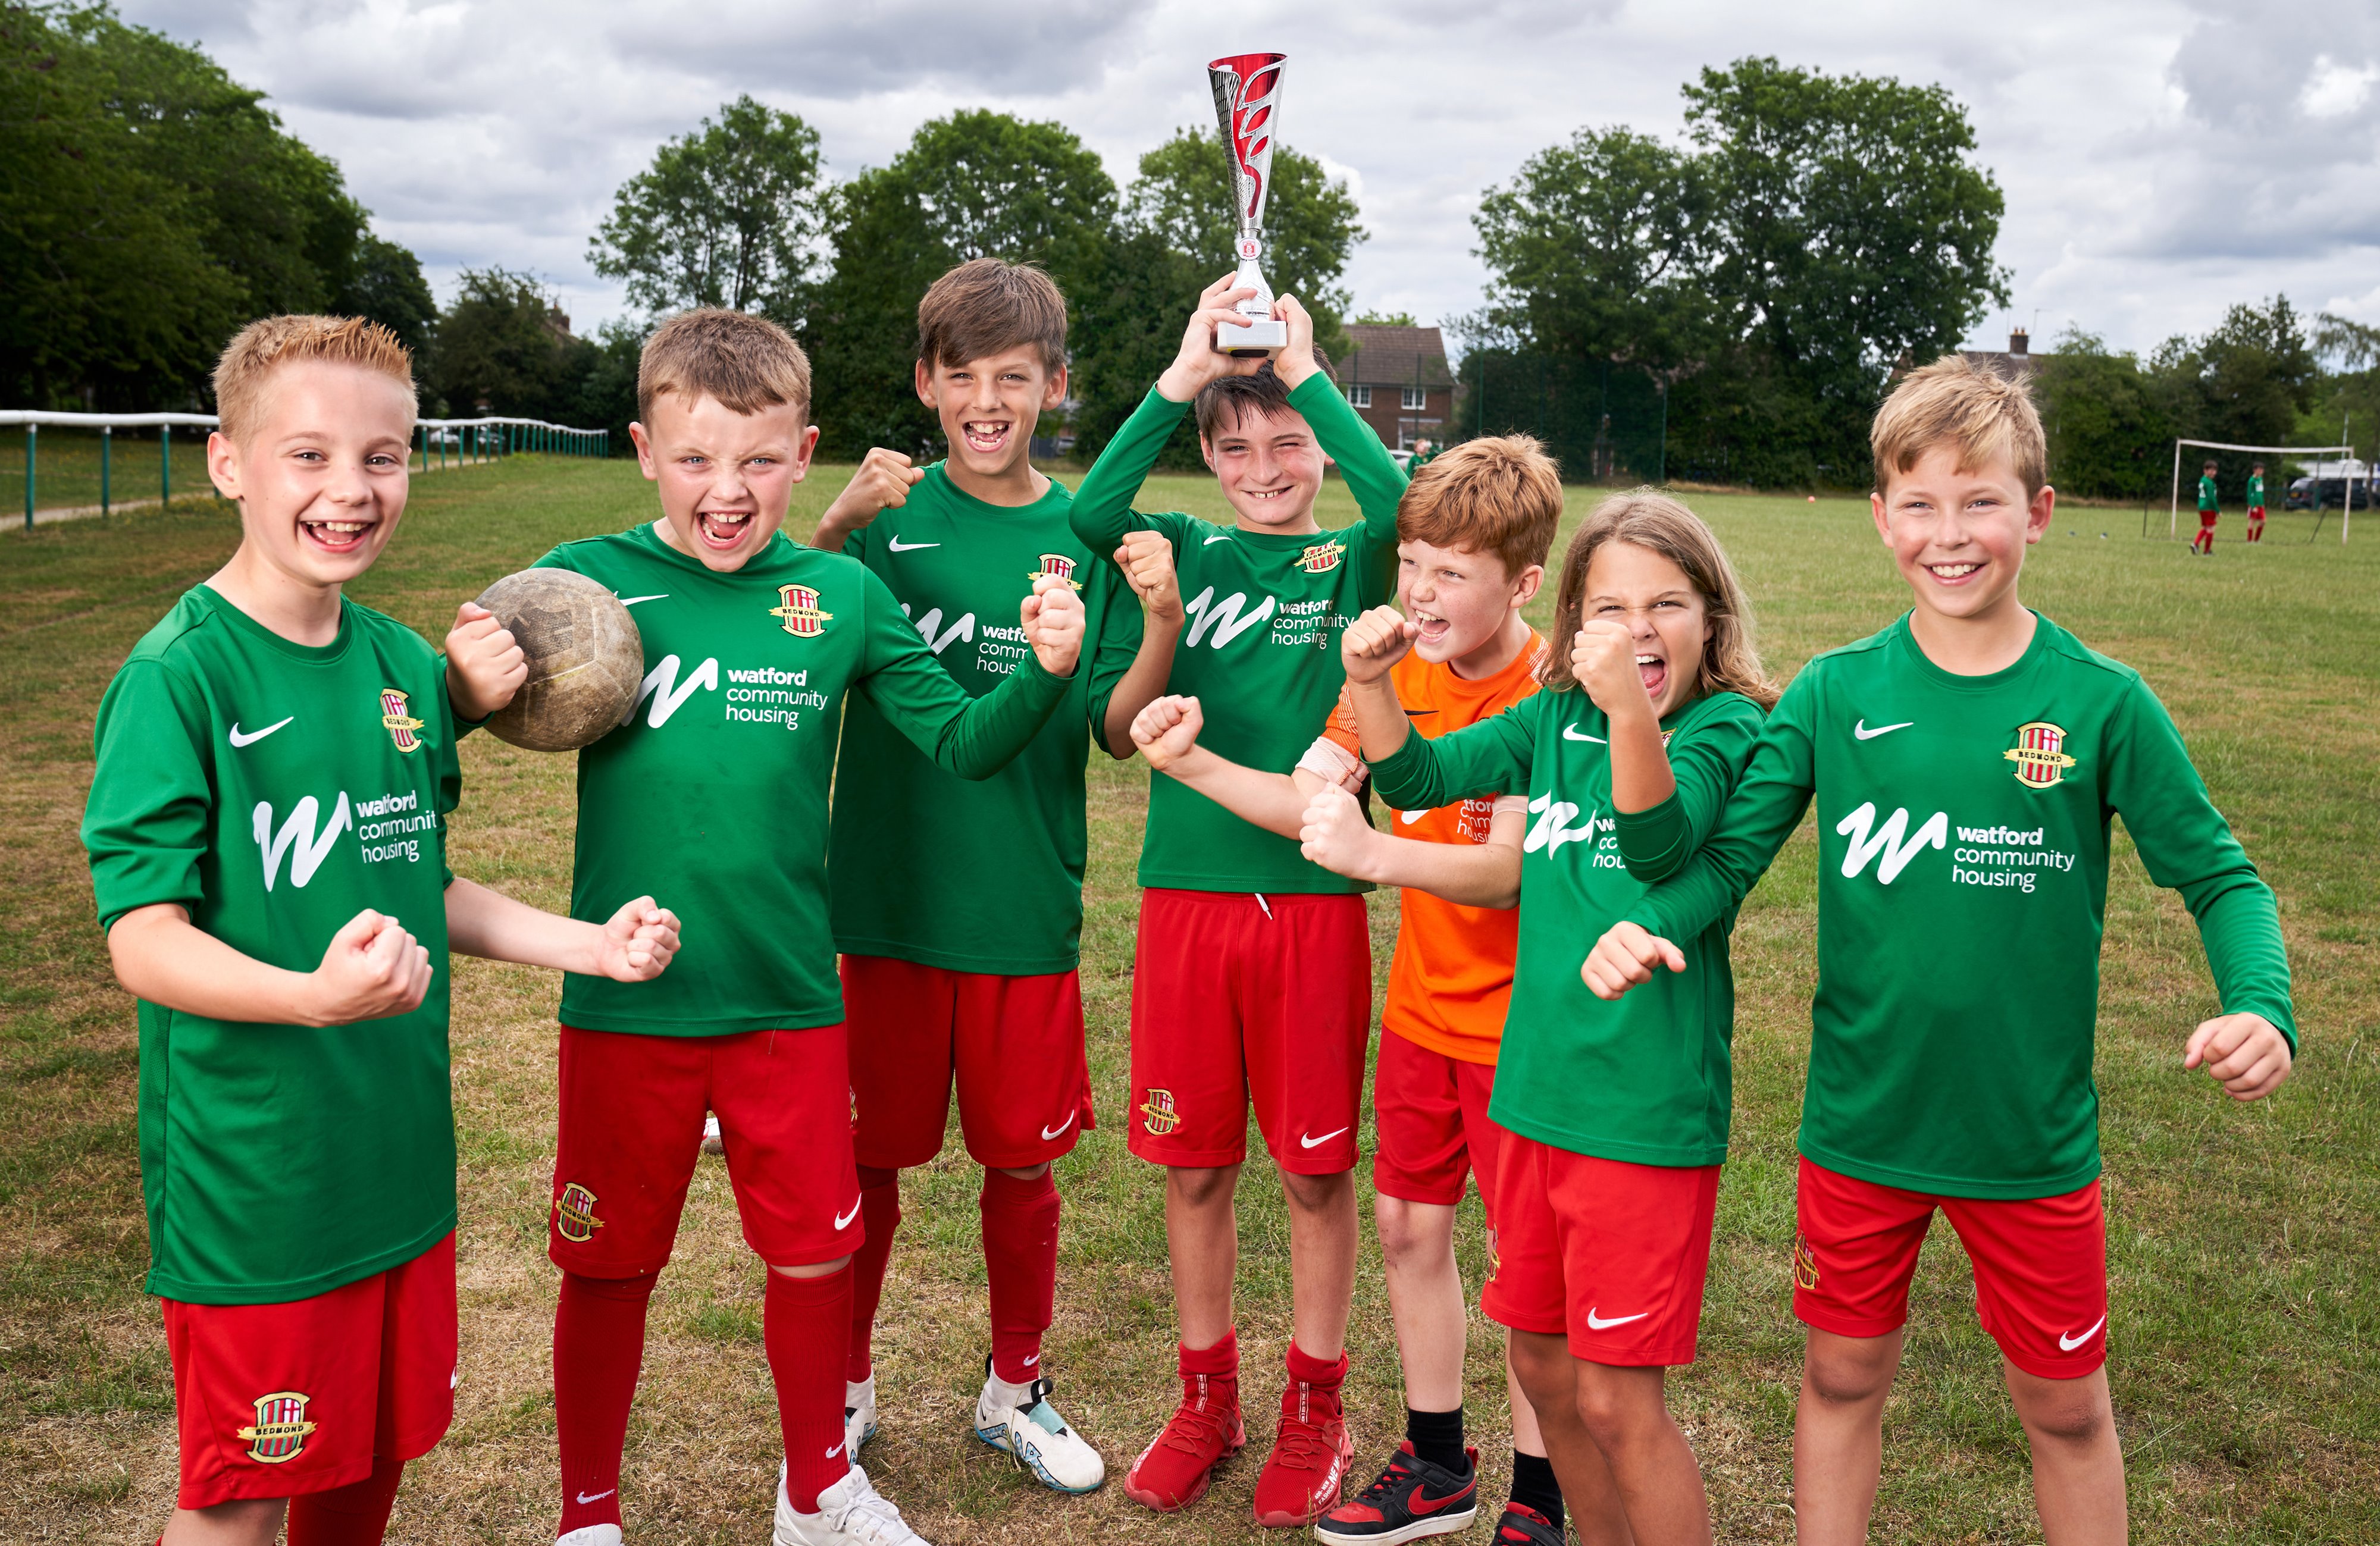 We sponsored Bedmond Youth Football Club!